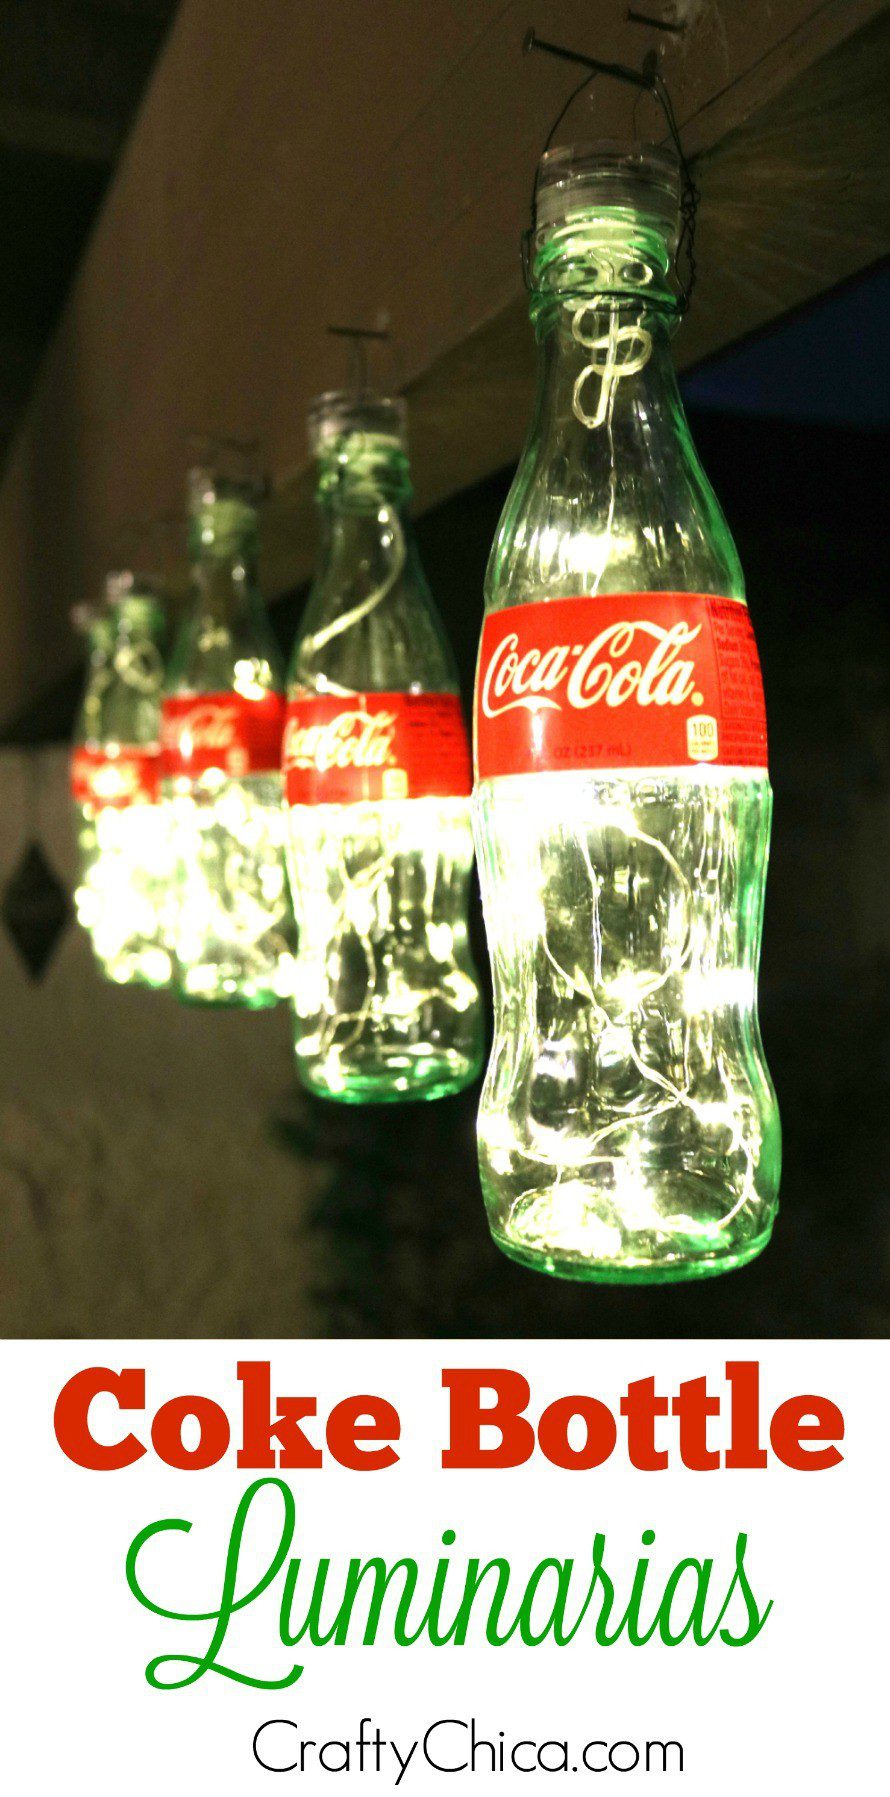 Coke-Bottle-Luminarias